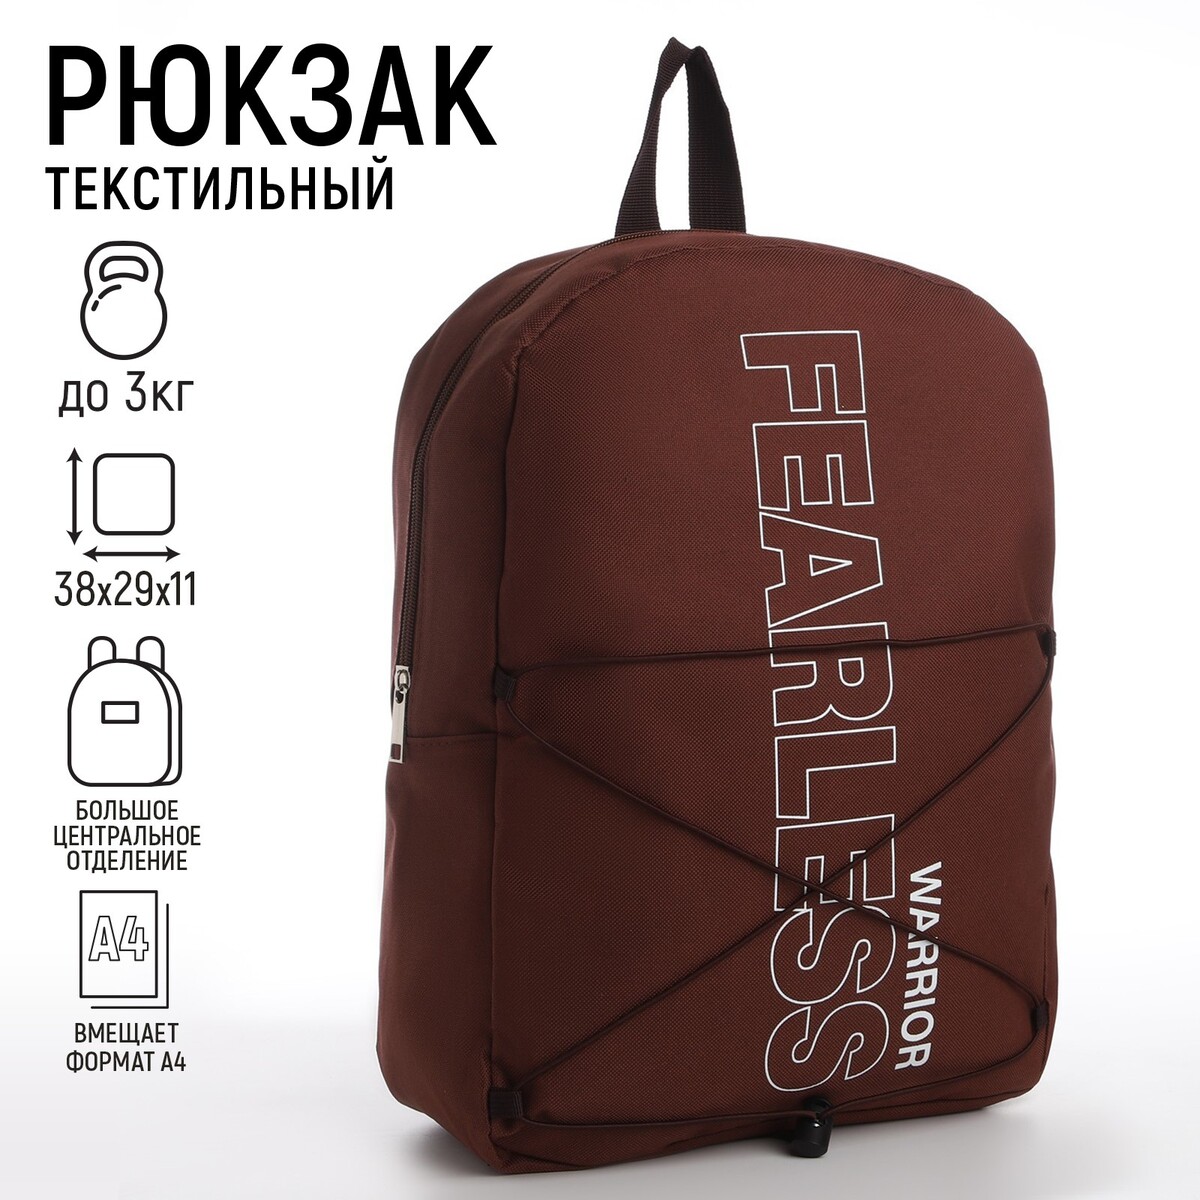 Рюкзак текстильный со шнуровкой fearless, 38х29х11 см, коричневый рюкзак текстильный со шнуровкой fearless 38х29х11 см коричневый